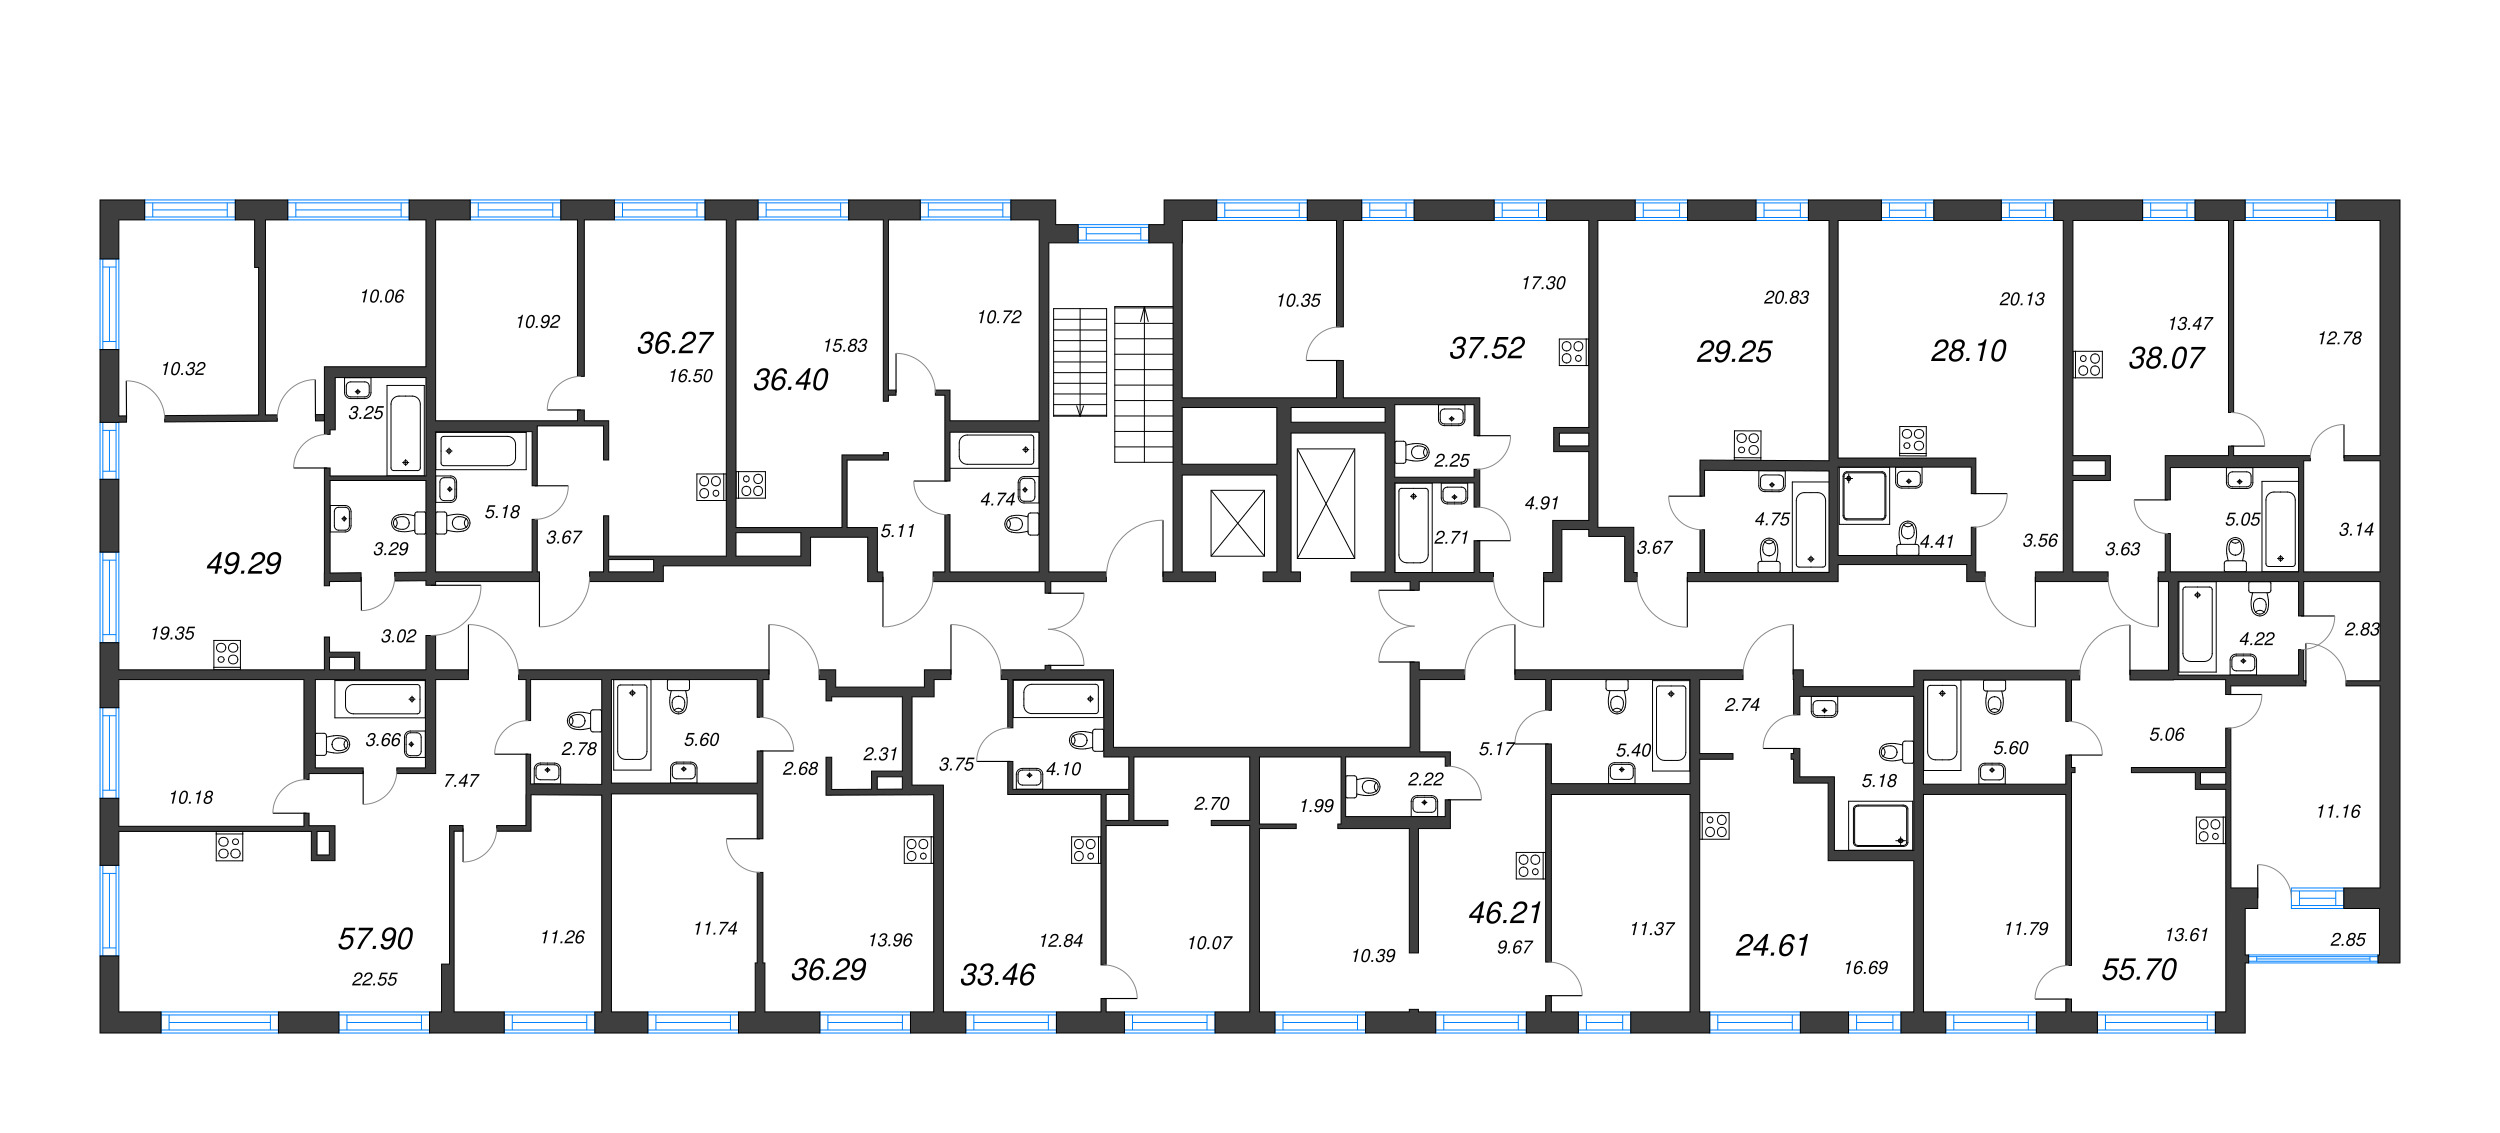 2-комнатная (Евро) квартира, 37.52 м² - планировка этажа